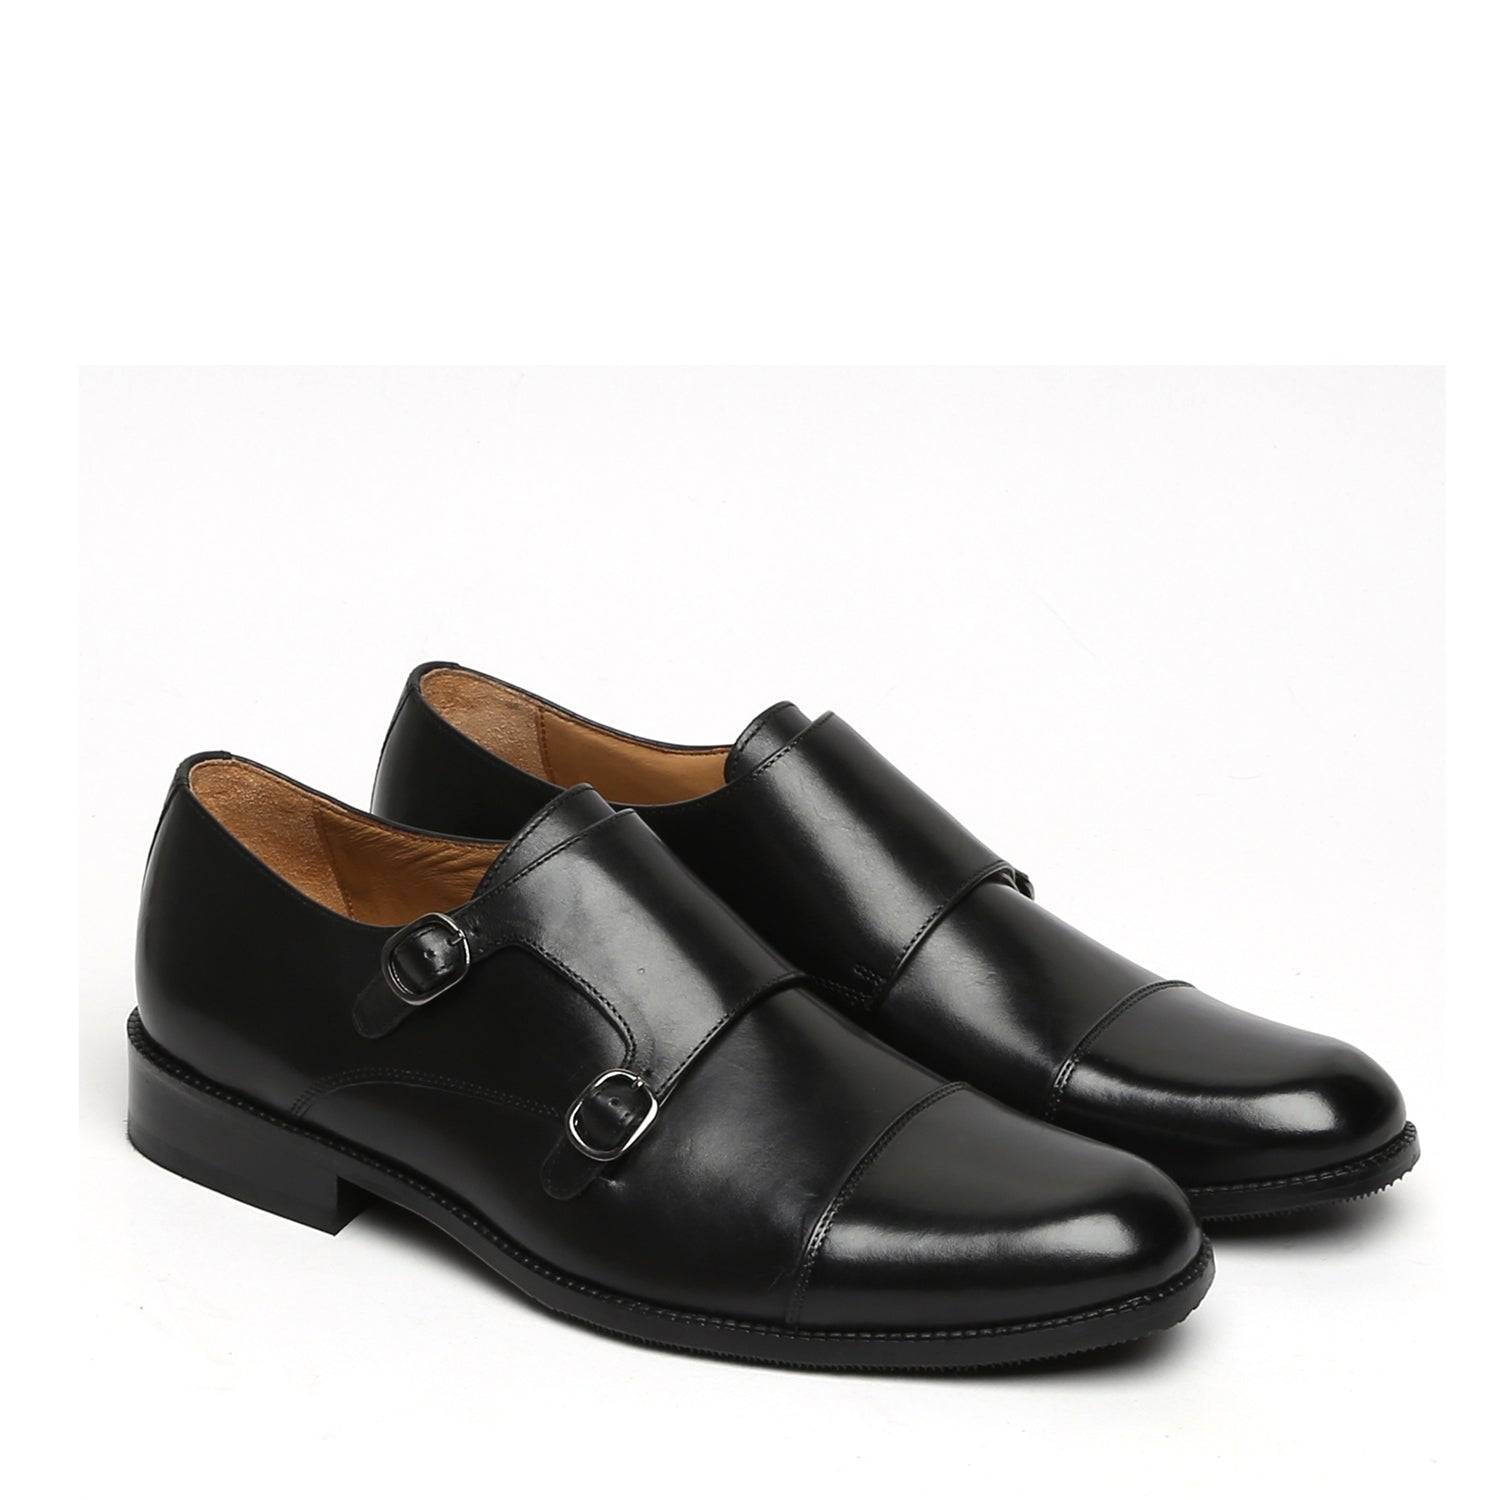 Black Genuine Leather Cap Toe Double Monk Strap Formal Shoes By Brune & Bareskin